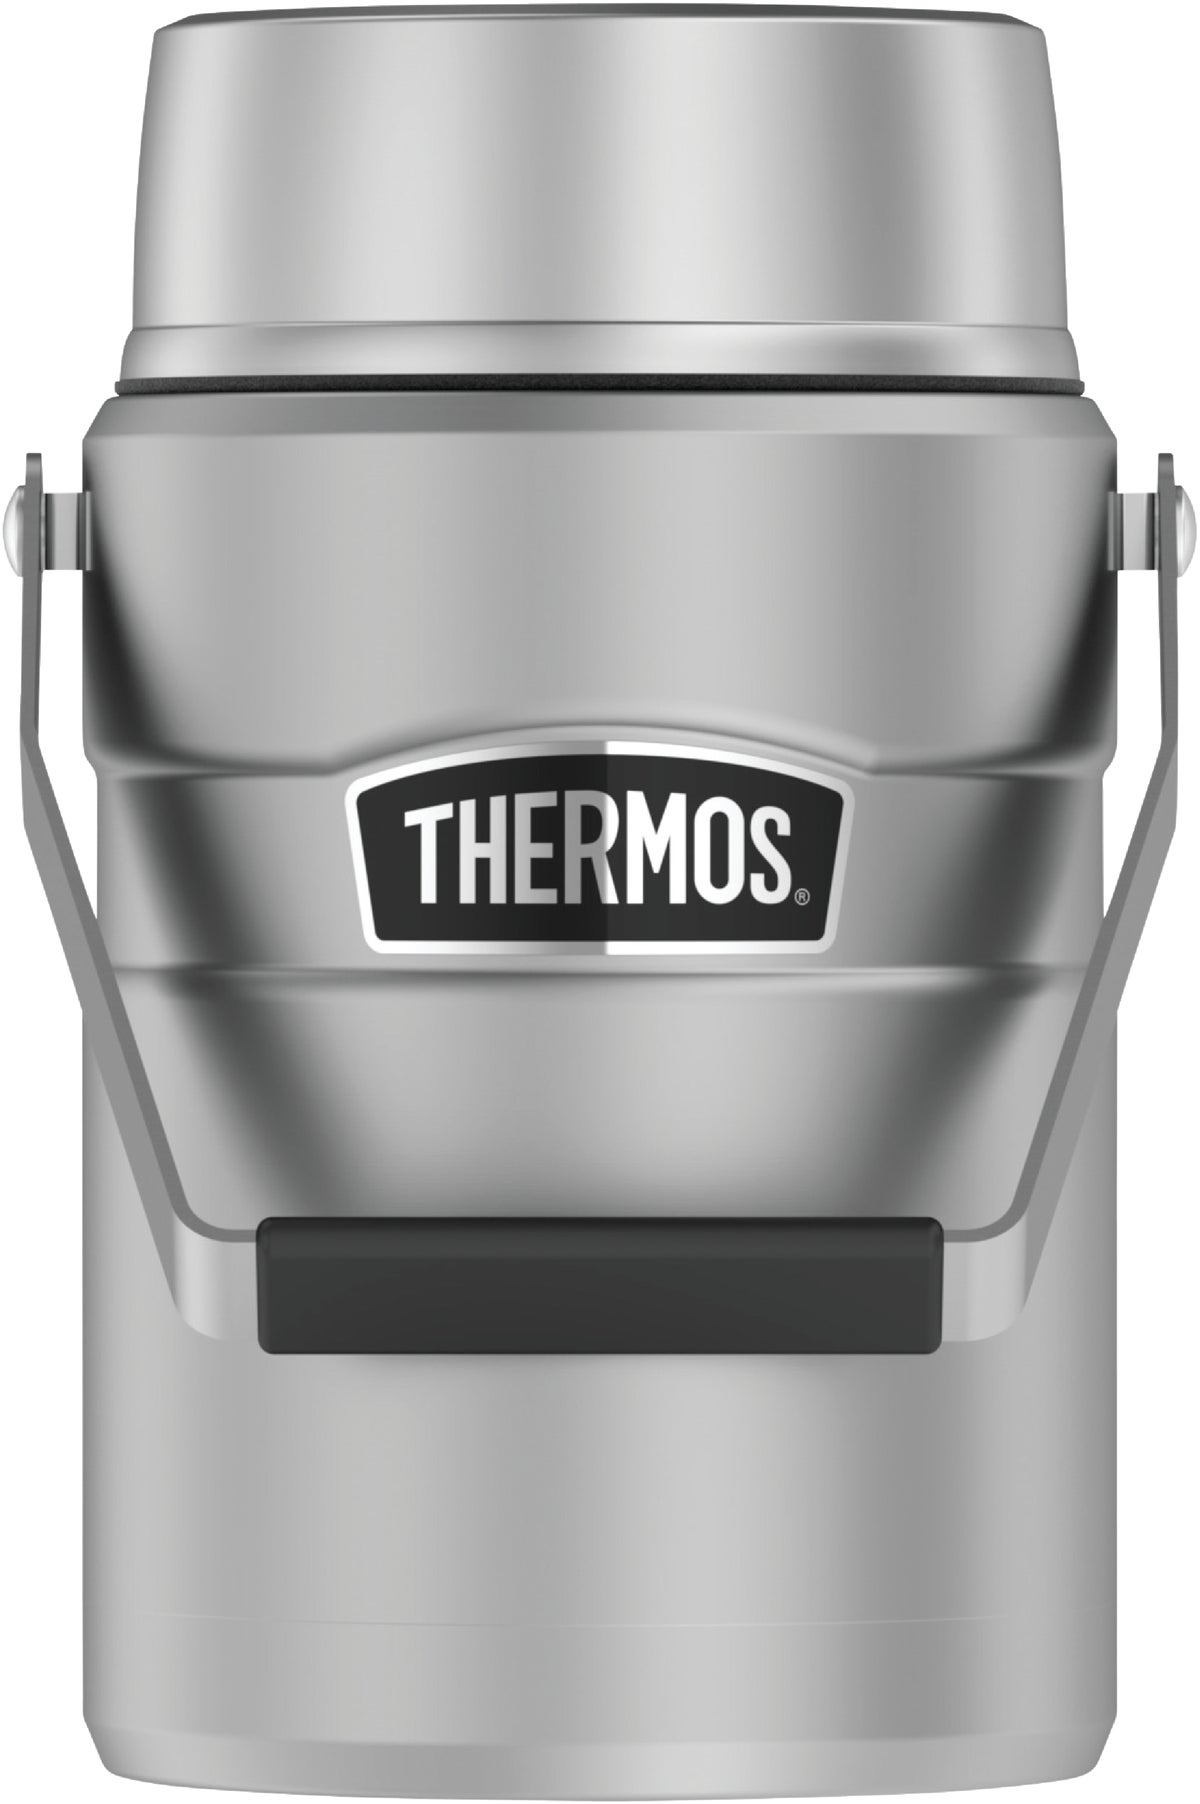 Thermos 2 Quart Thermal Beverage Dispenser, Silver